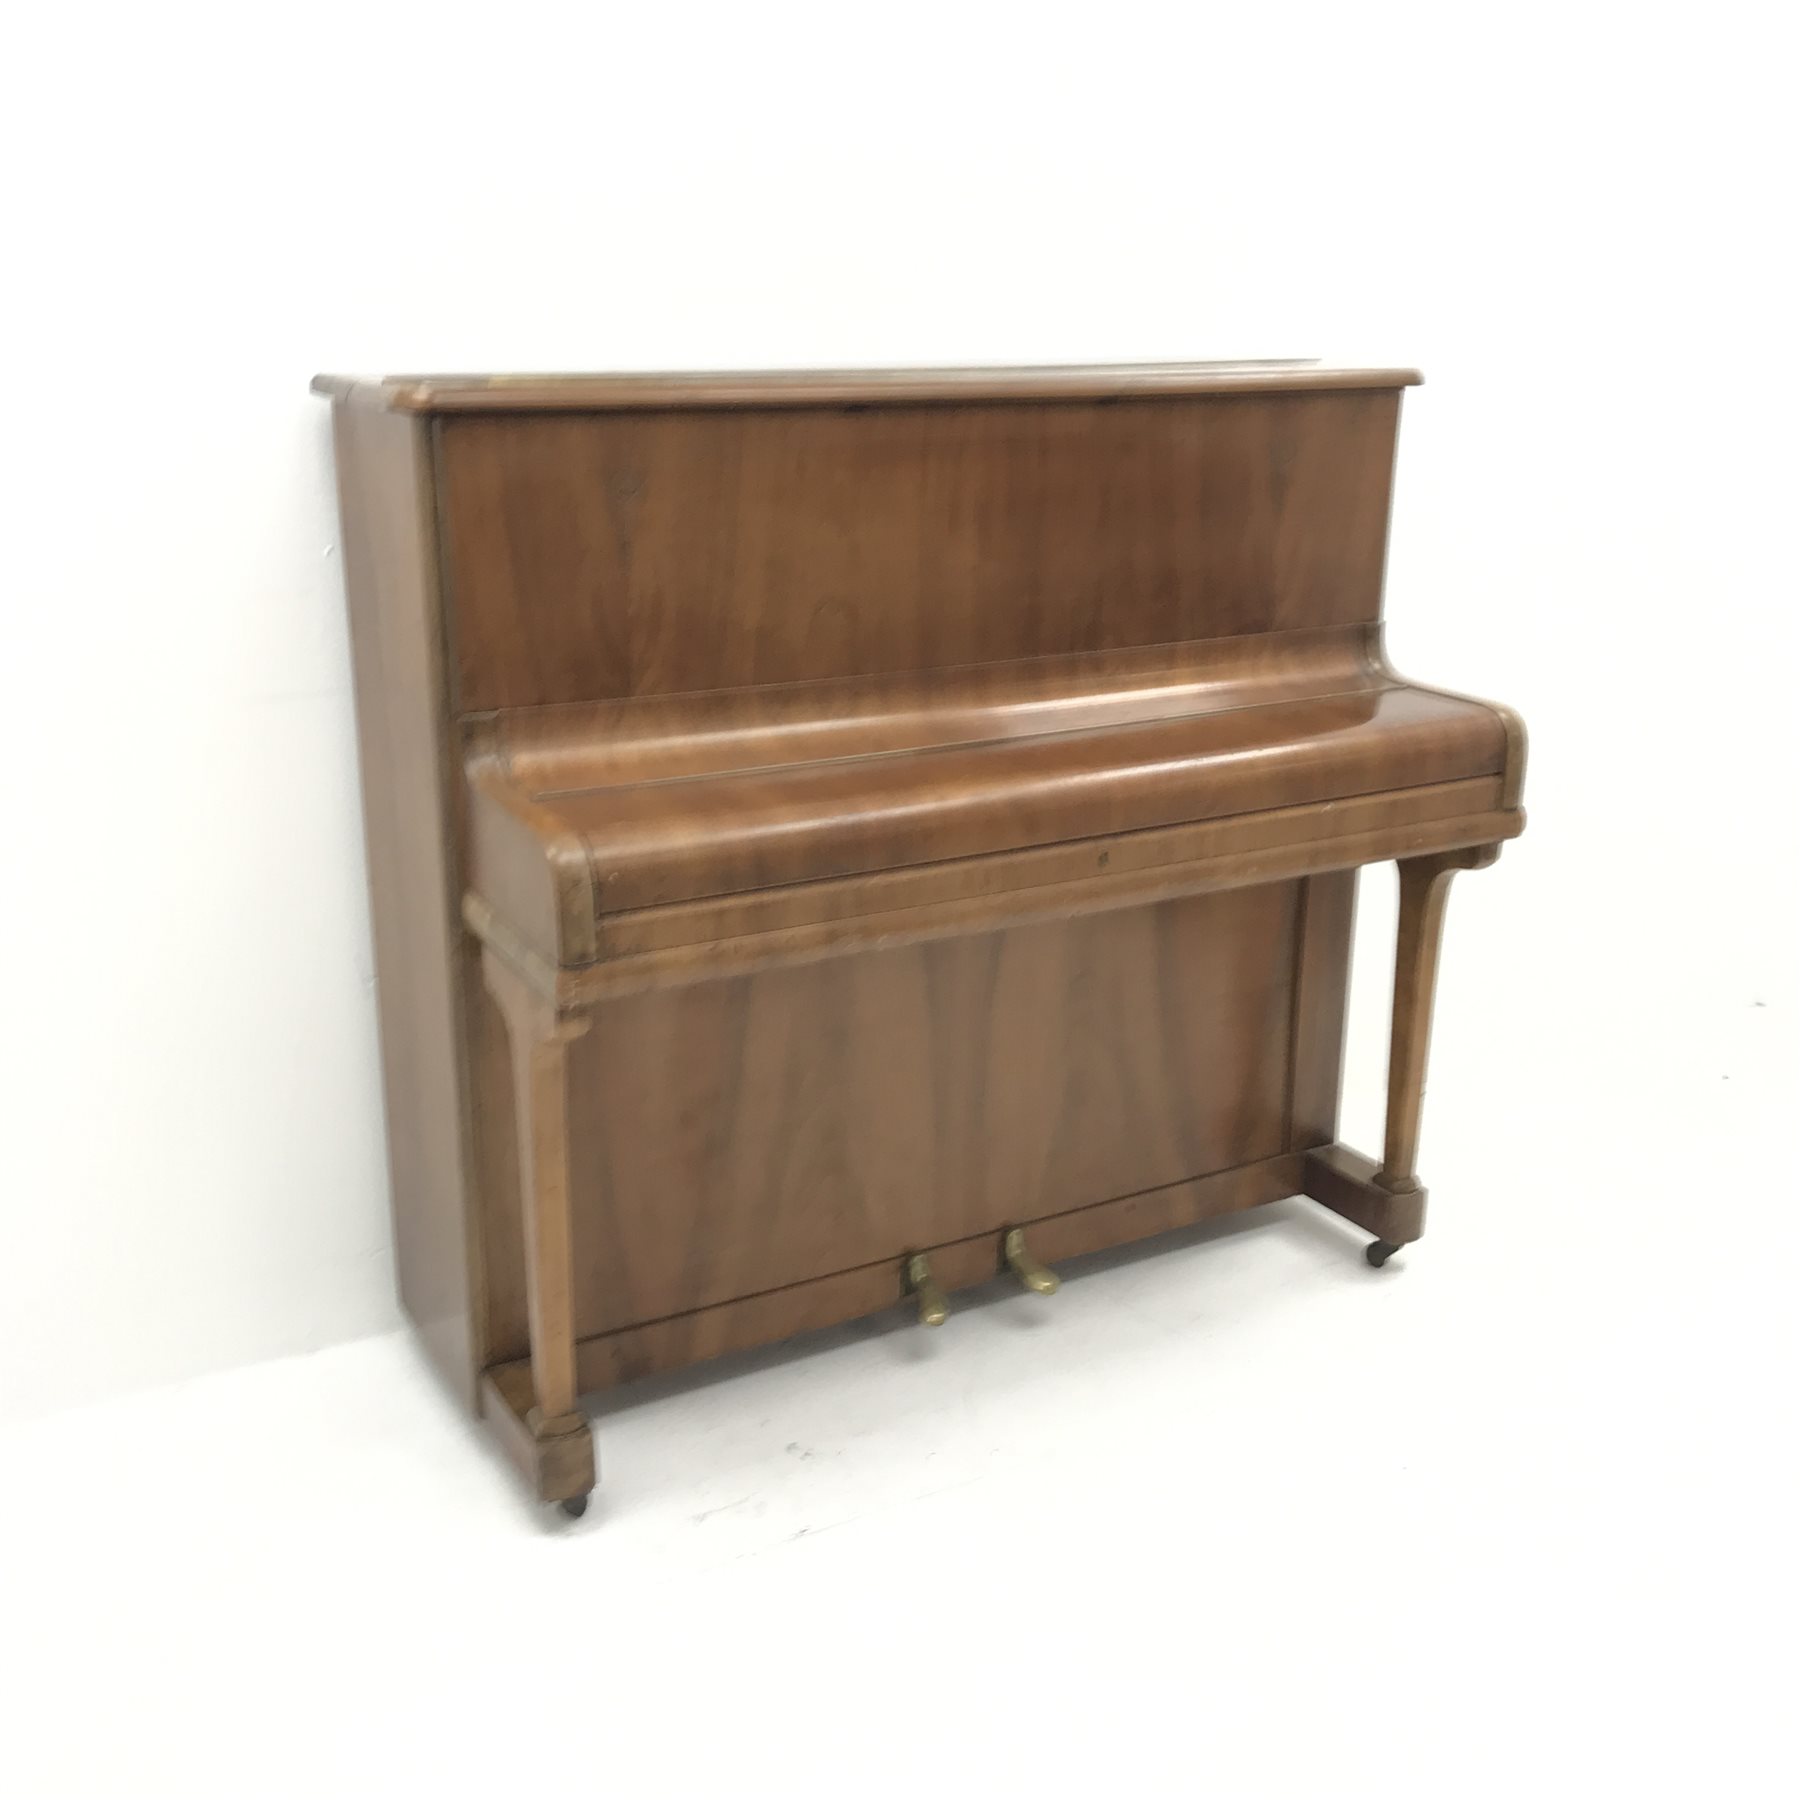 Godfrey walnut cased overstrung upright piano, W124cm, H113cm - Image 2 of 10